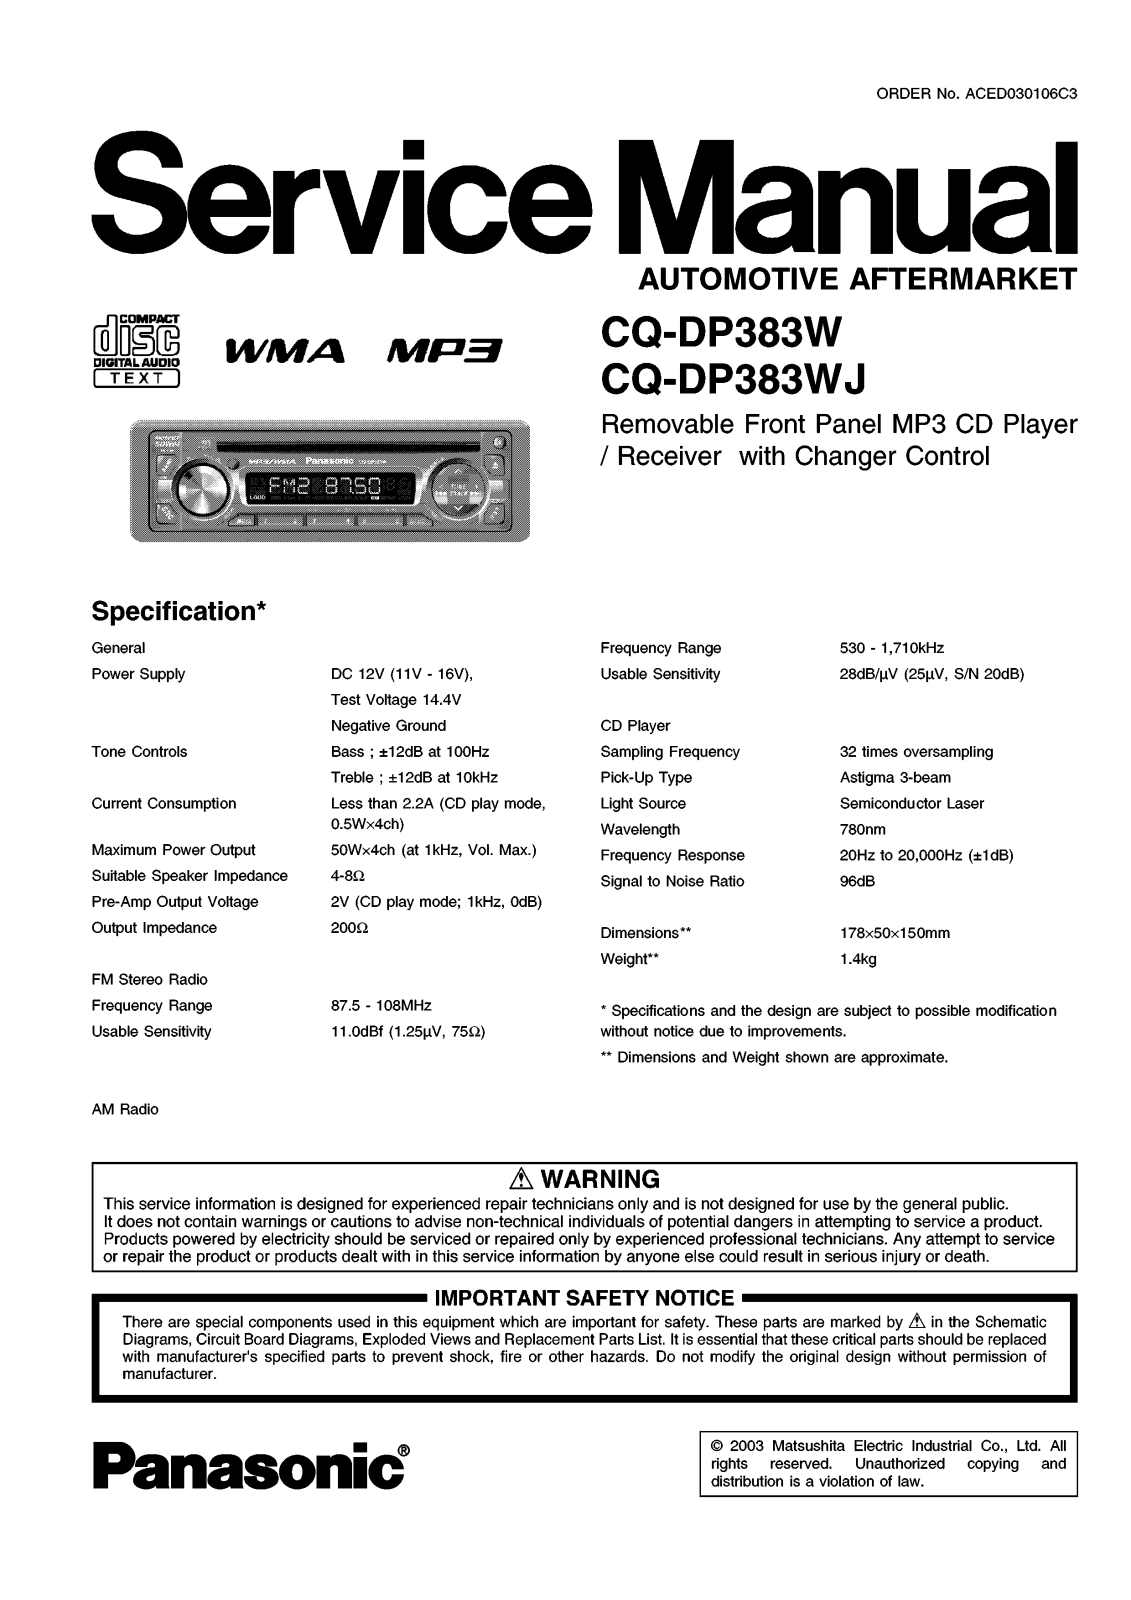 Panasonic CQDP-383-W, CQDP-383-WJ Service manual